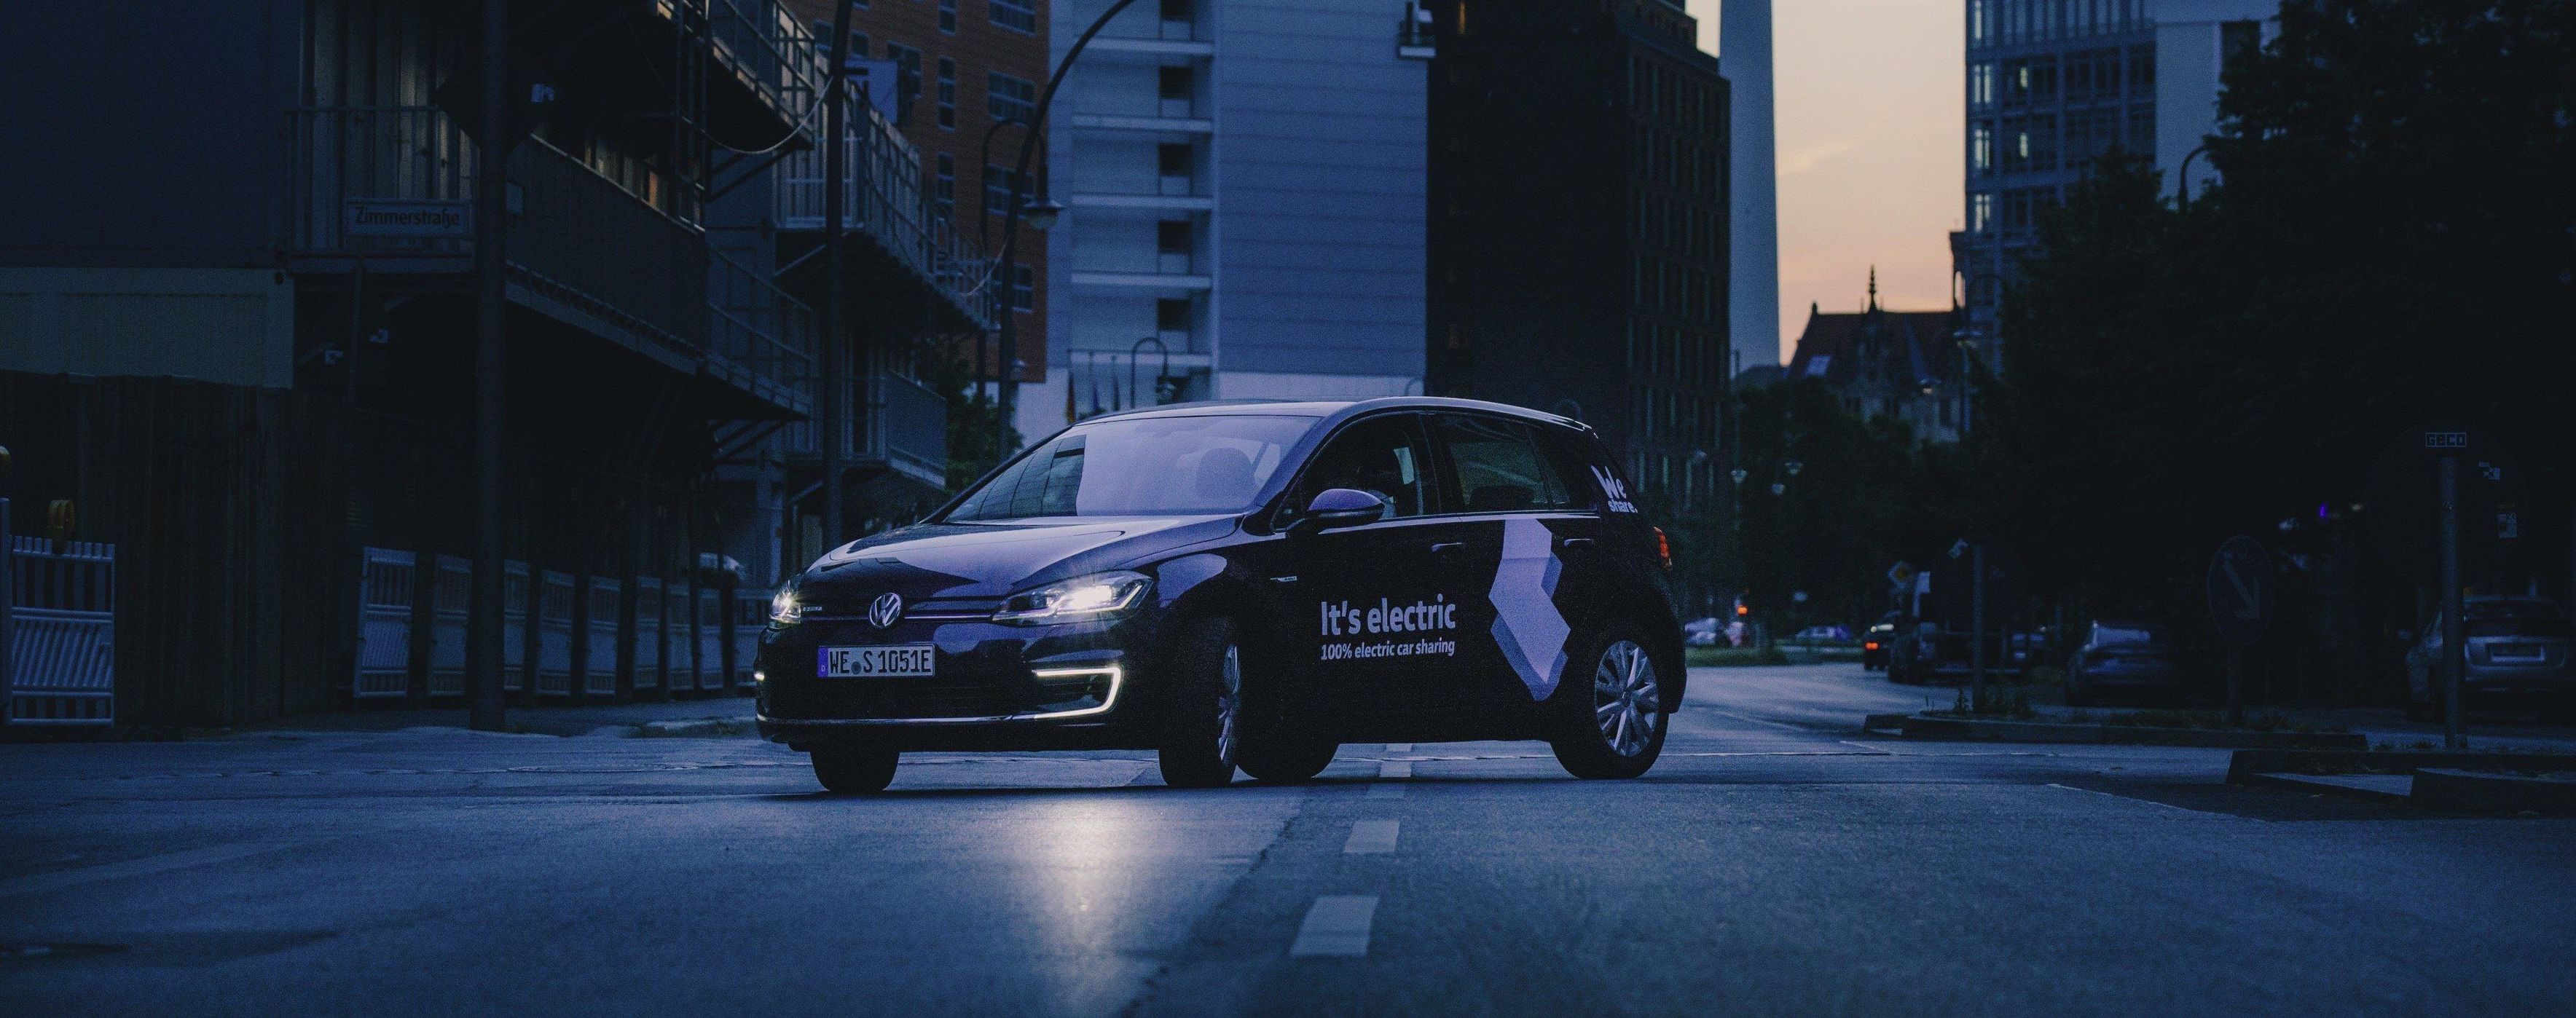 Volkswagen запустил каршеринг с электрокарами в Берлине